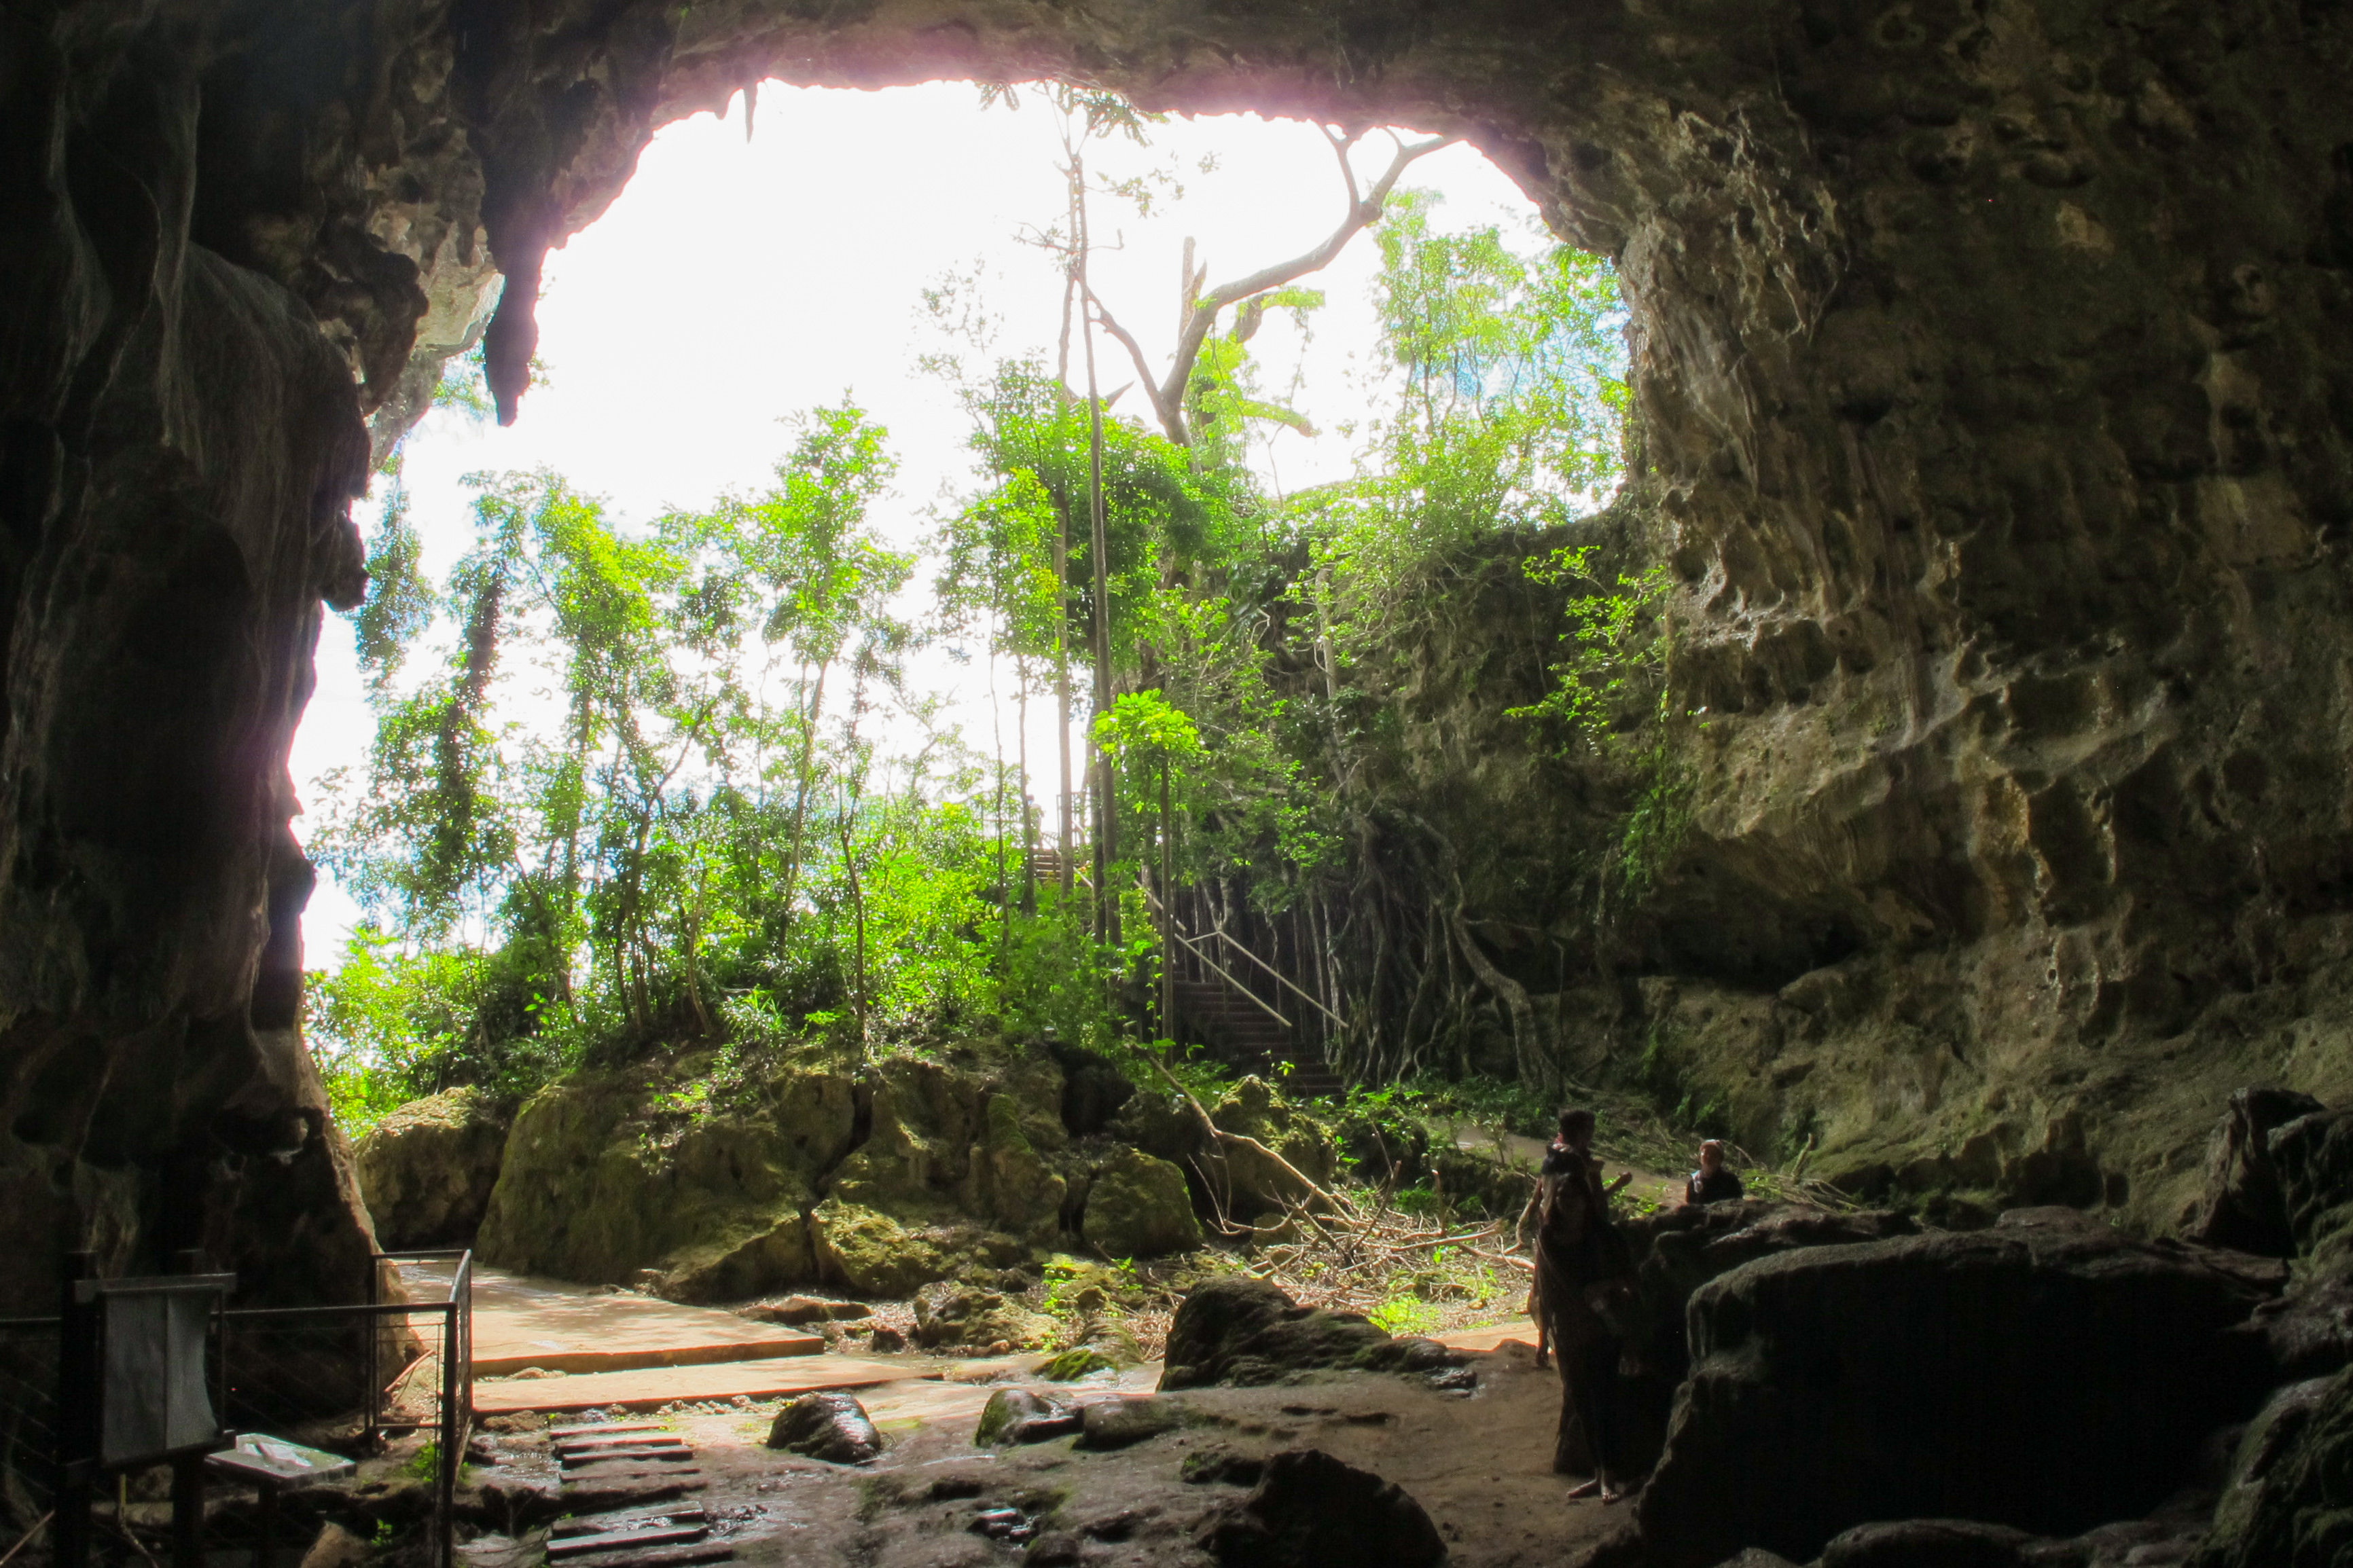 Callou Cave site where the fossils were found